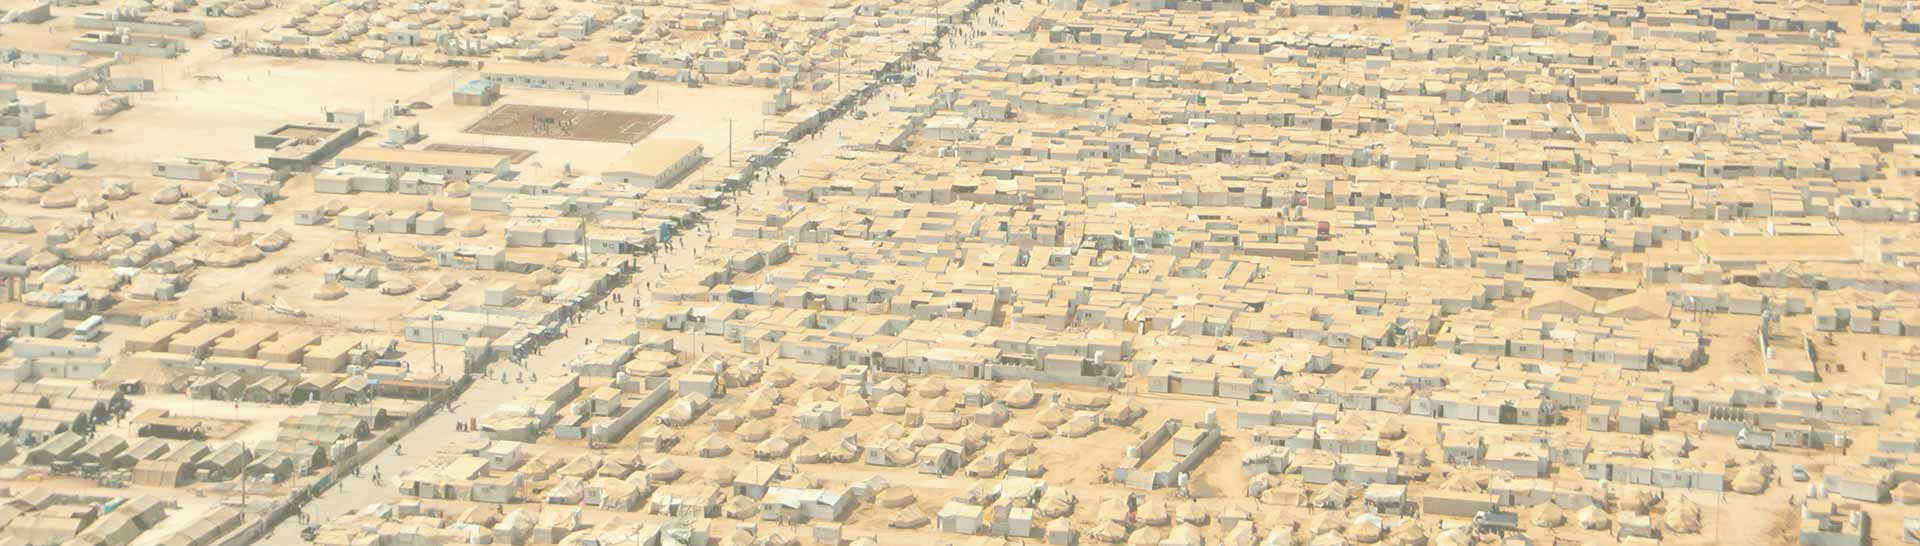 title-Zaatari-Refugee-Camp-in-Jordan